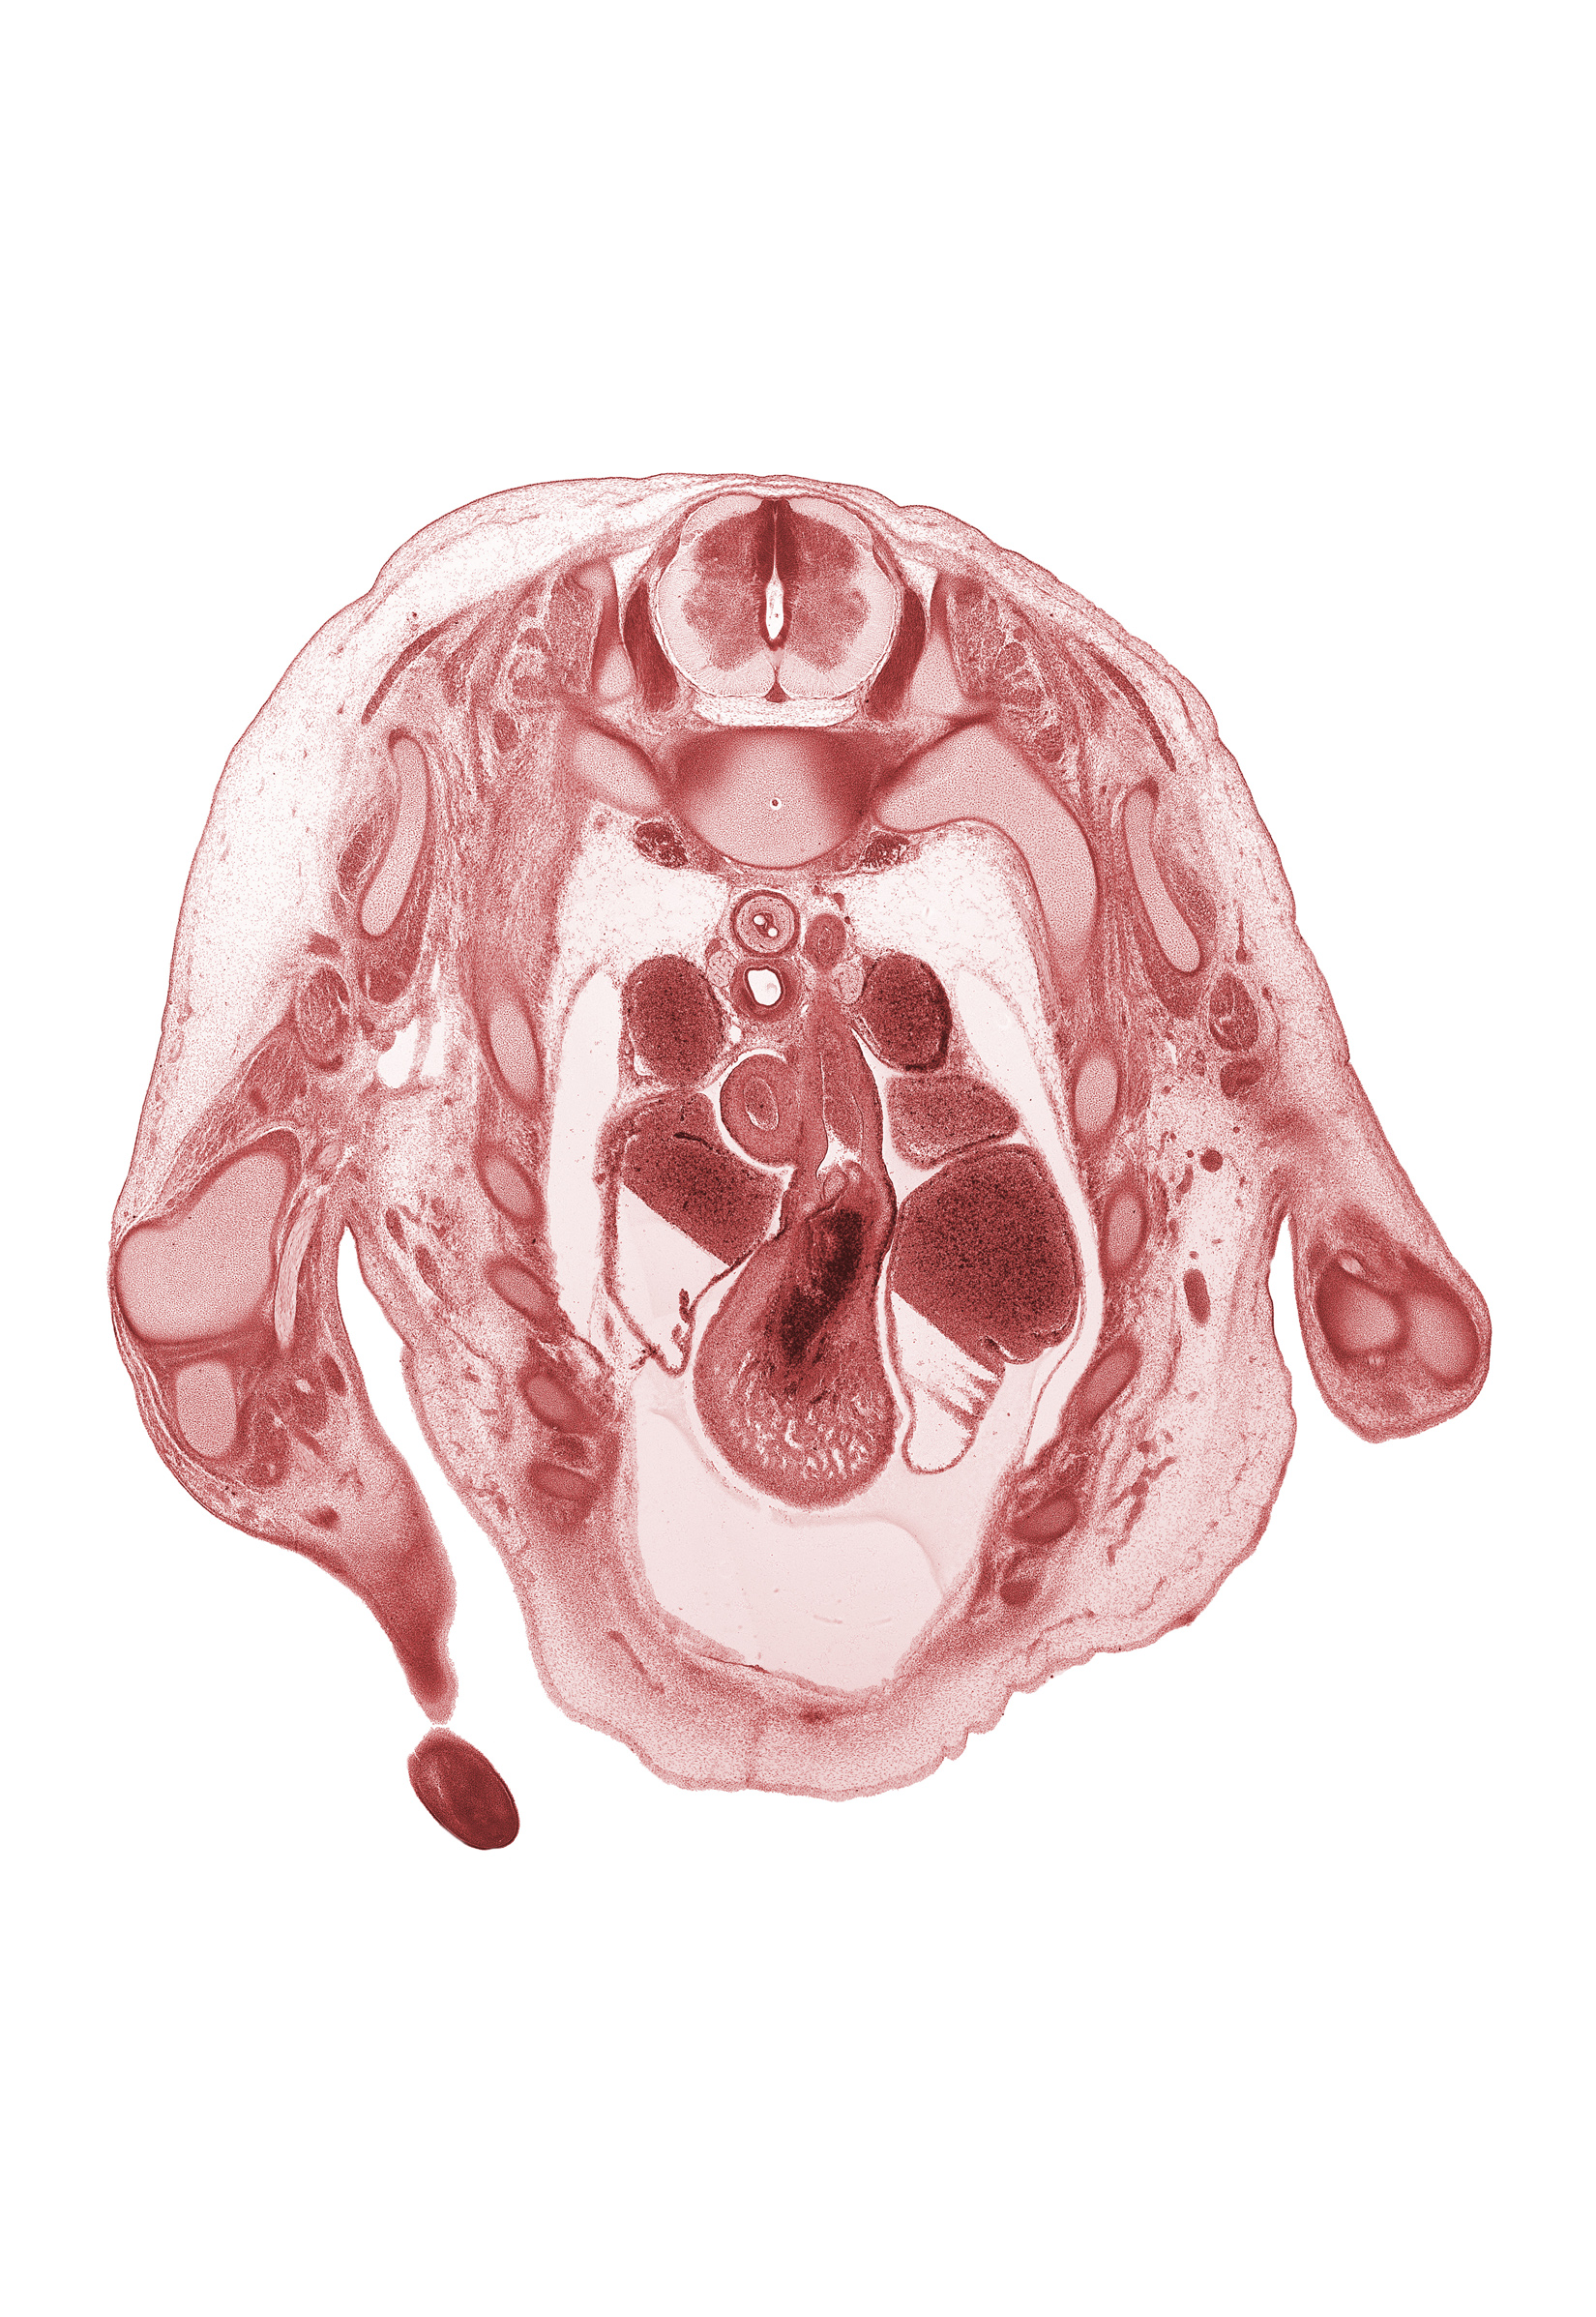 T-1 spinal ganglion, aorta, ascending aorta, blood cells in left atrium, cardiac prominence, esophagus, head of rib 2, intermediate zone, marginal zone, musculi pectinati in wall of left auricle, musculi pectinati in wall of right auricle, pericardial cavity, phrenic nerve, pulmonary semilunar valve, pulmonary trunk, superior vena cava, sympathetic ganglion, trachea, ulna, ulnar nerve, ventricular zone